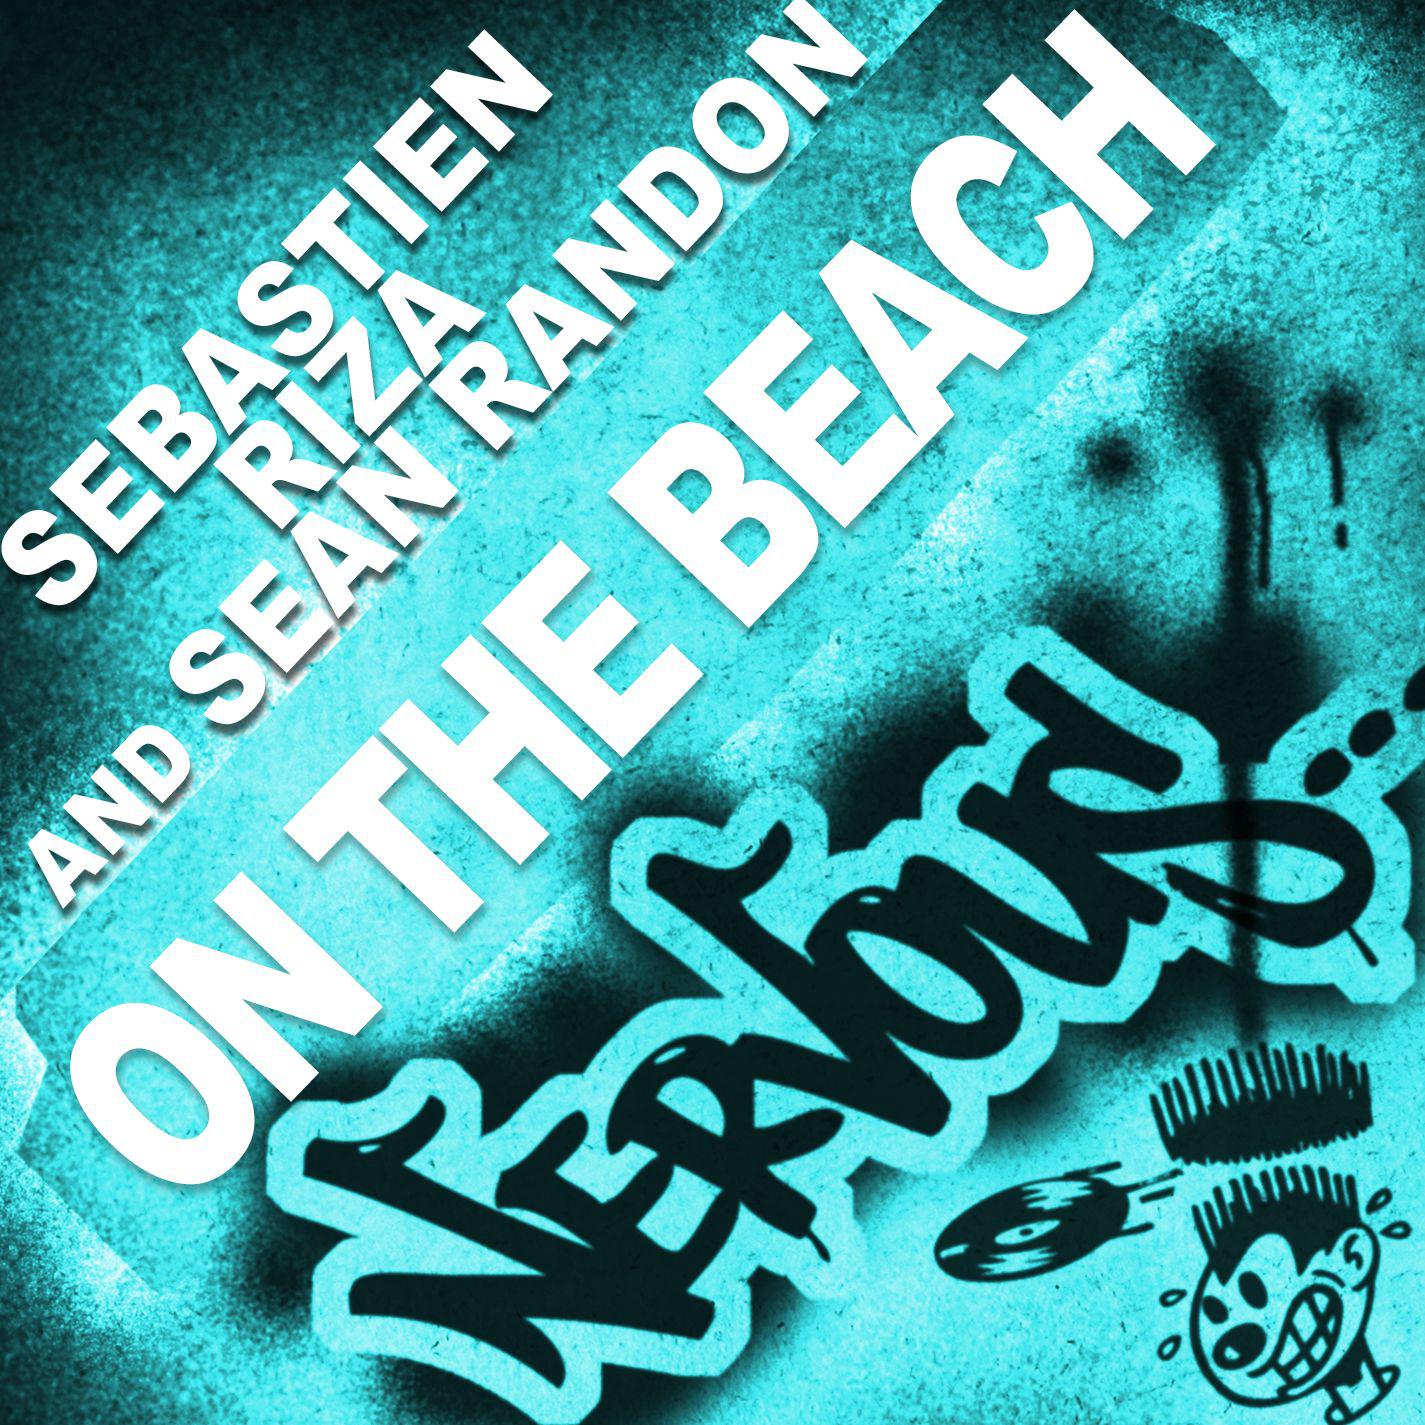 Sebastian Reza - On The Beach (Original Mix)